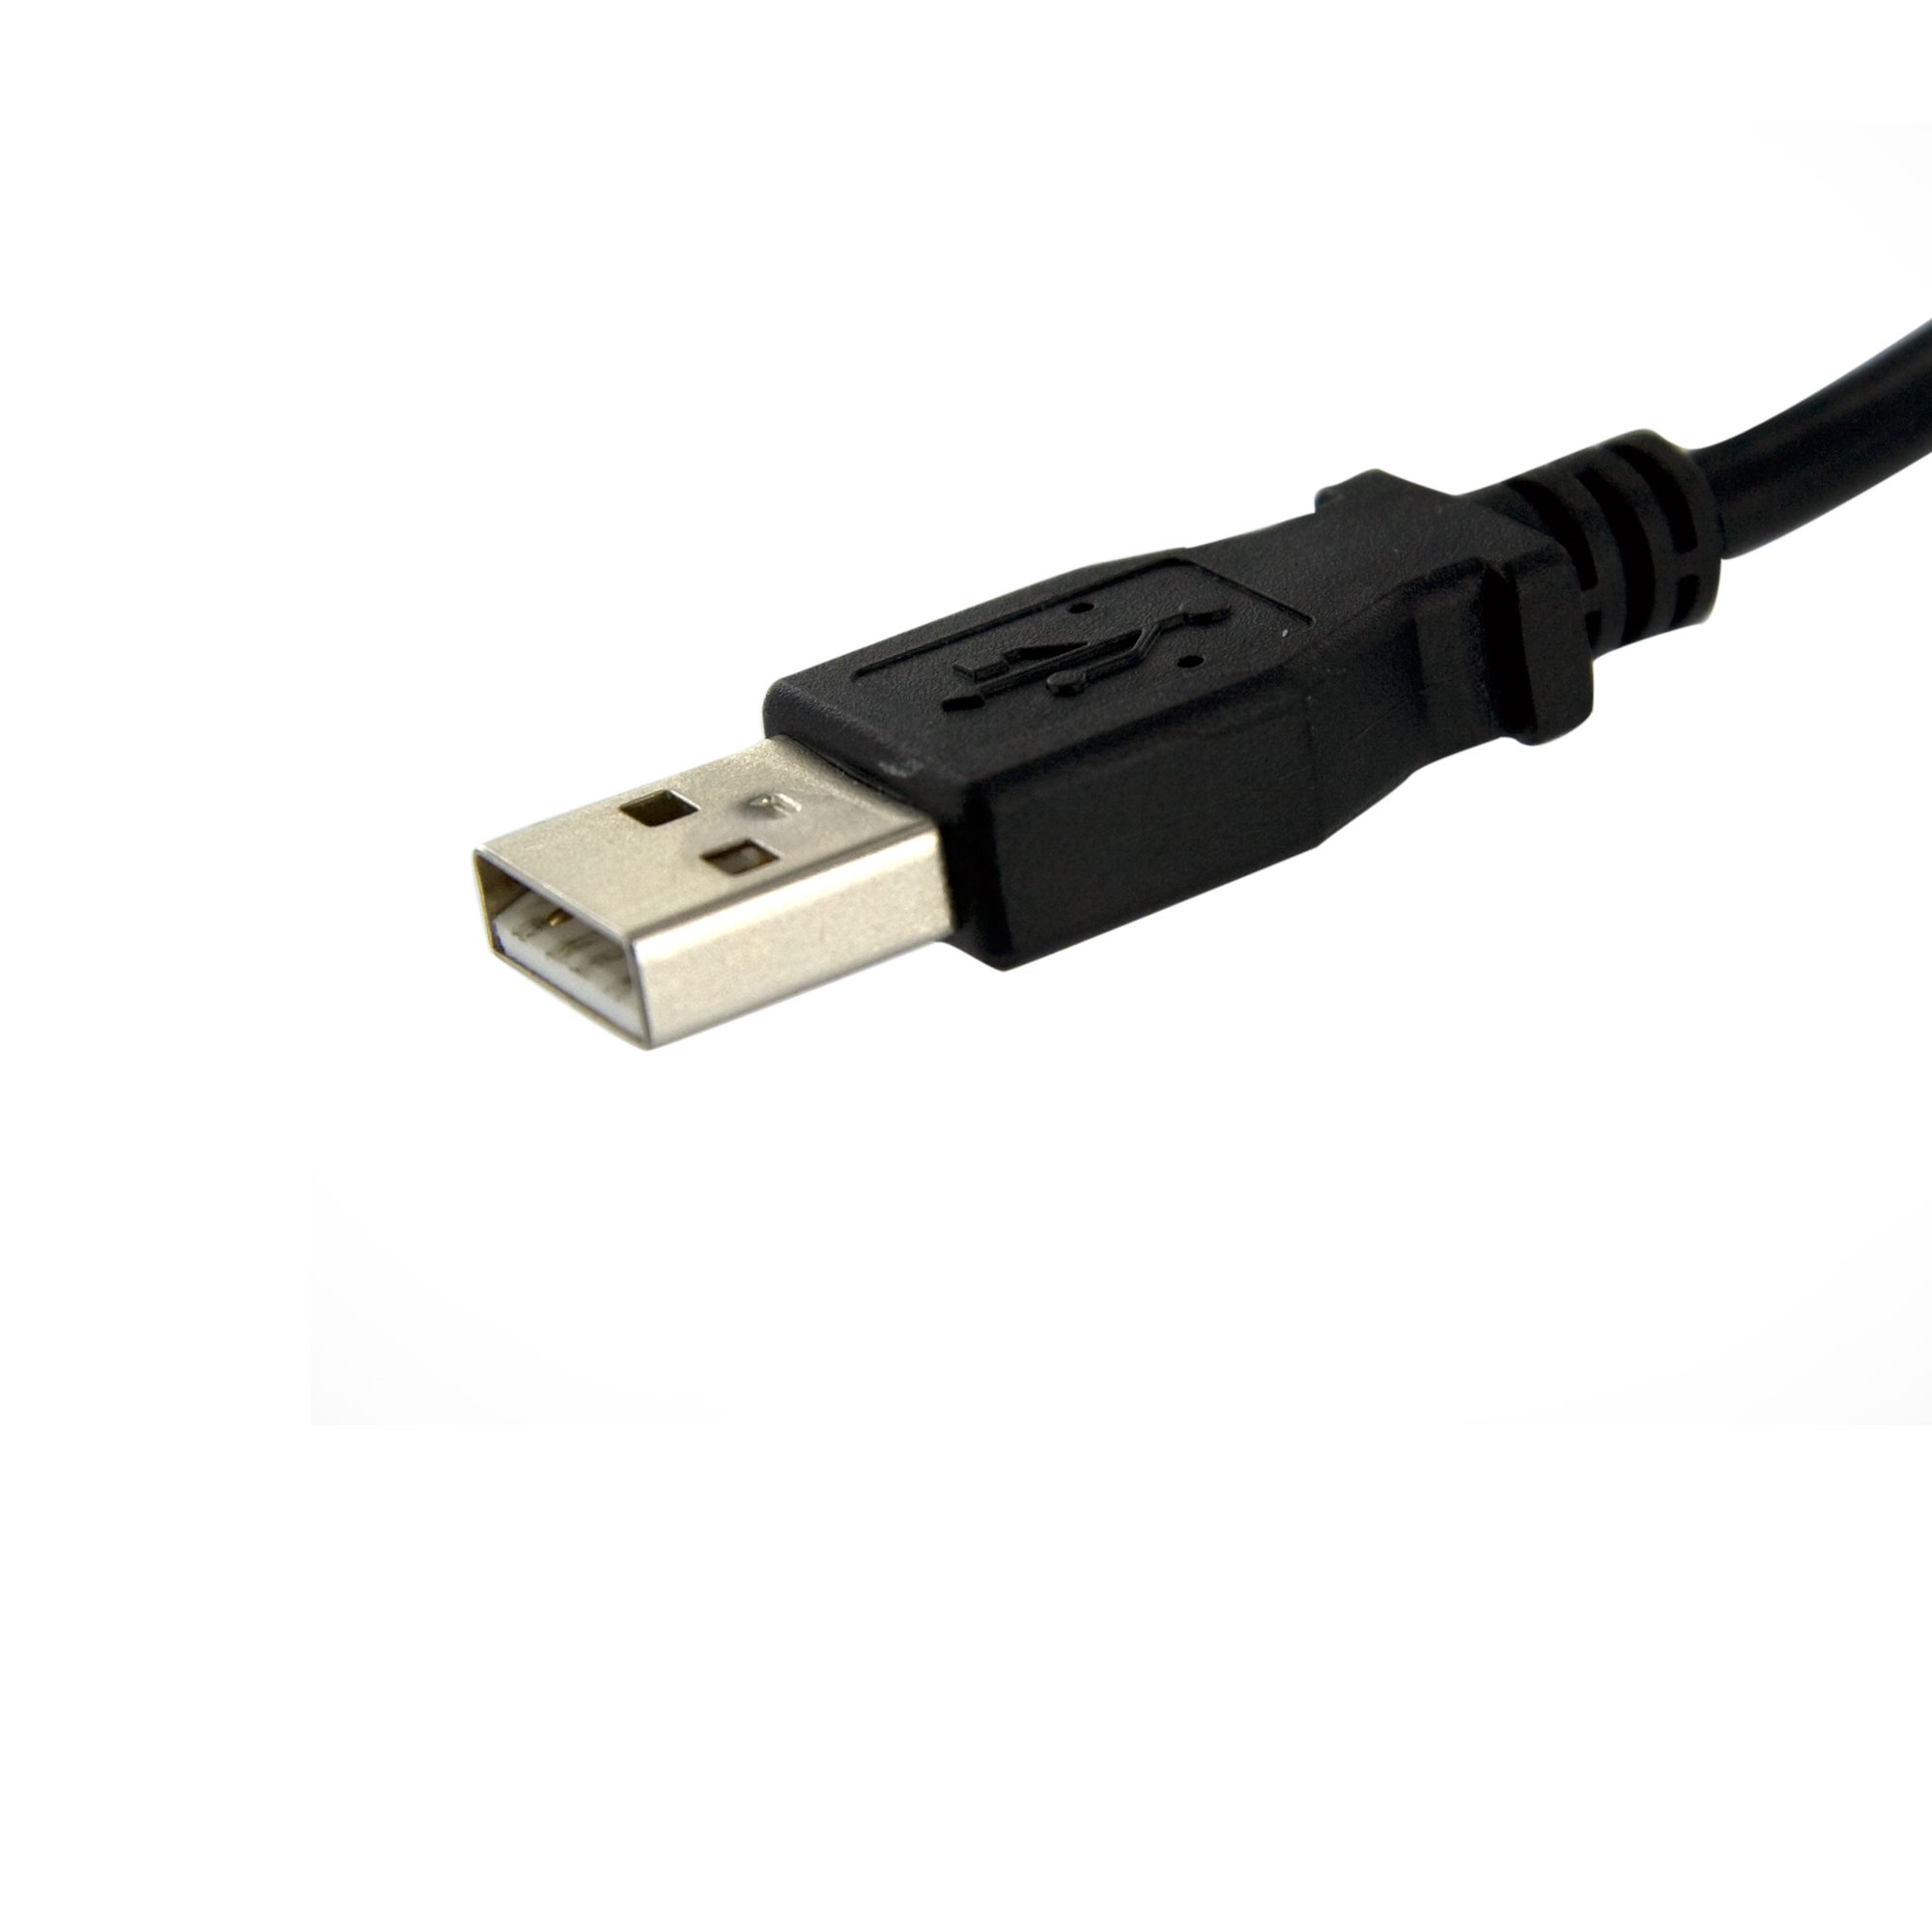 Купить usb новосибирск. USB Cable male female Black кабель. USB B на панель. USB F.